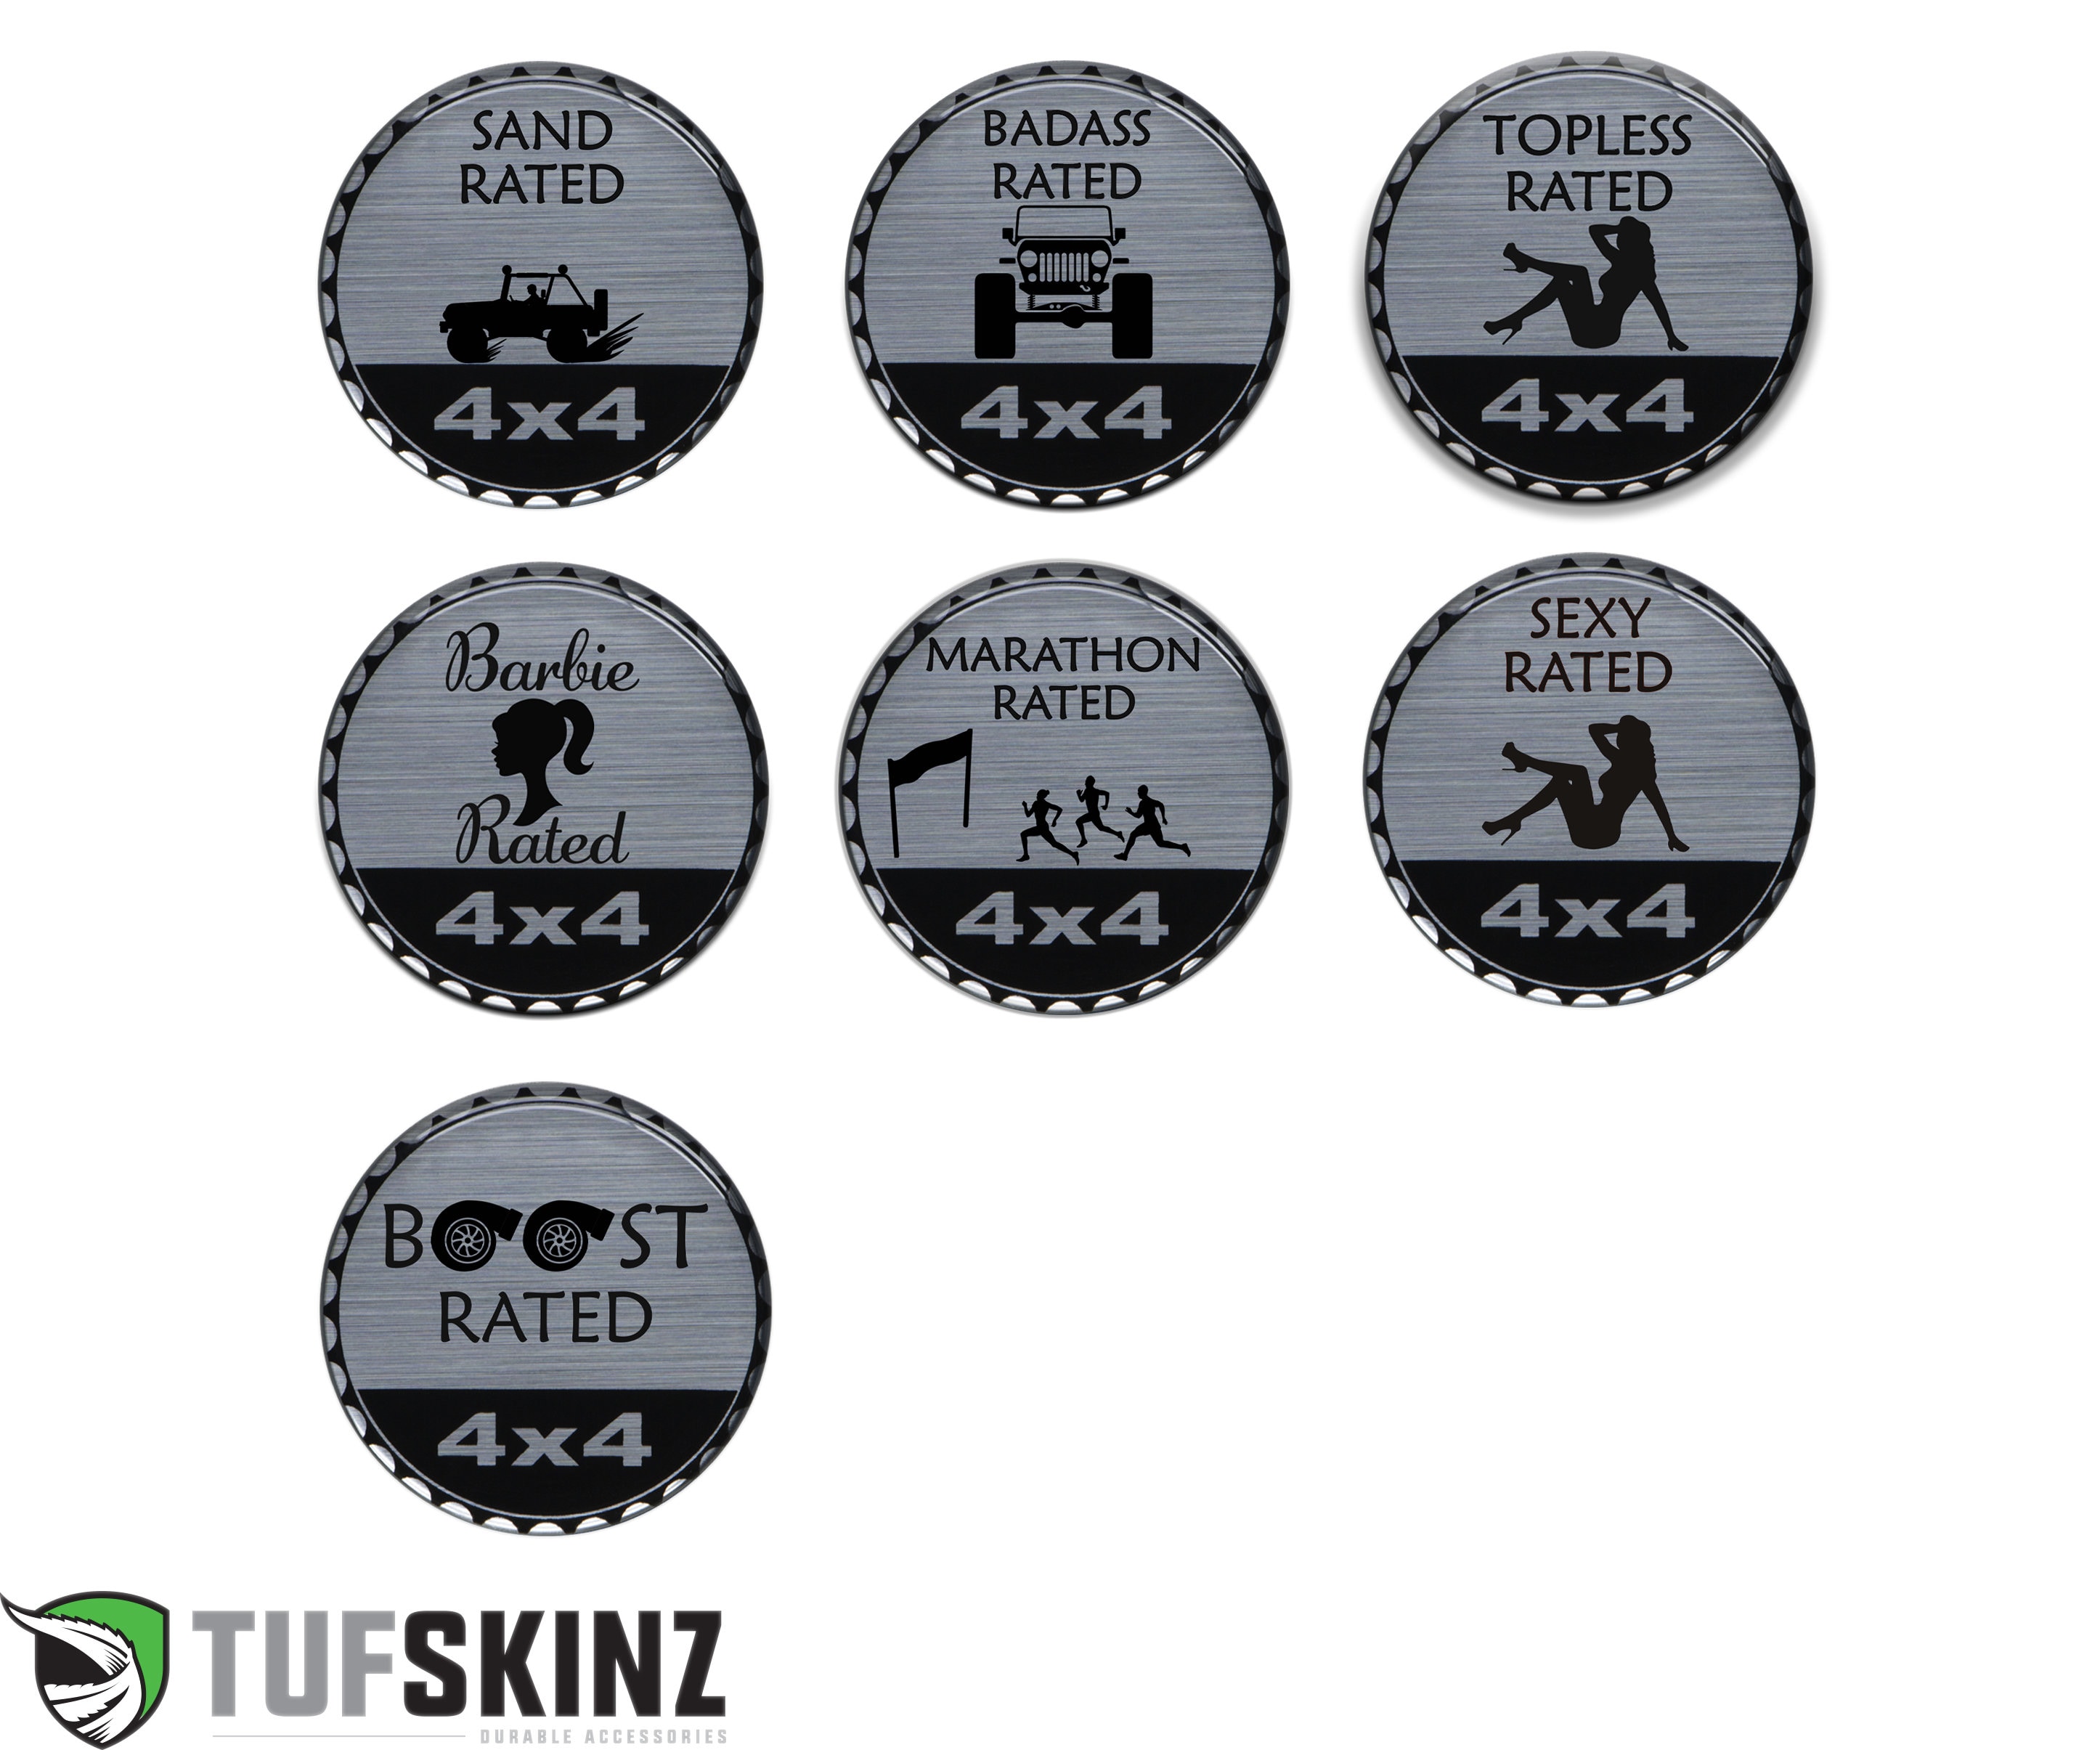 Tufskinz Fun Rated Badges Brushed Silver 1 Piece Kit 